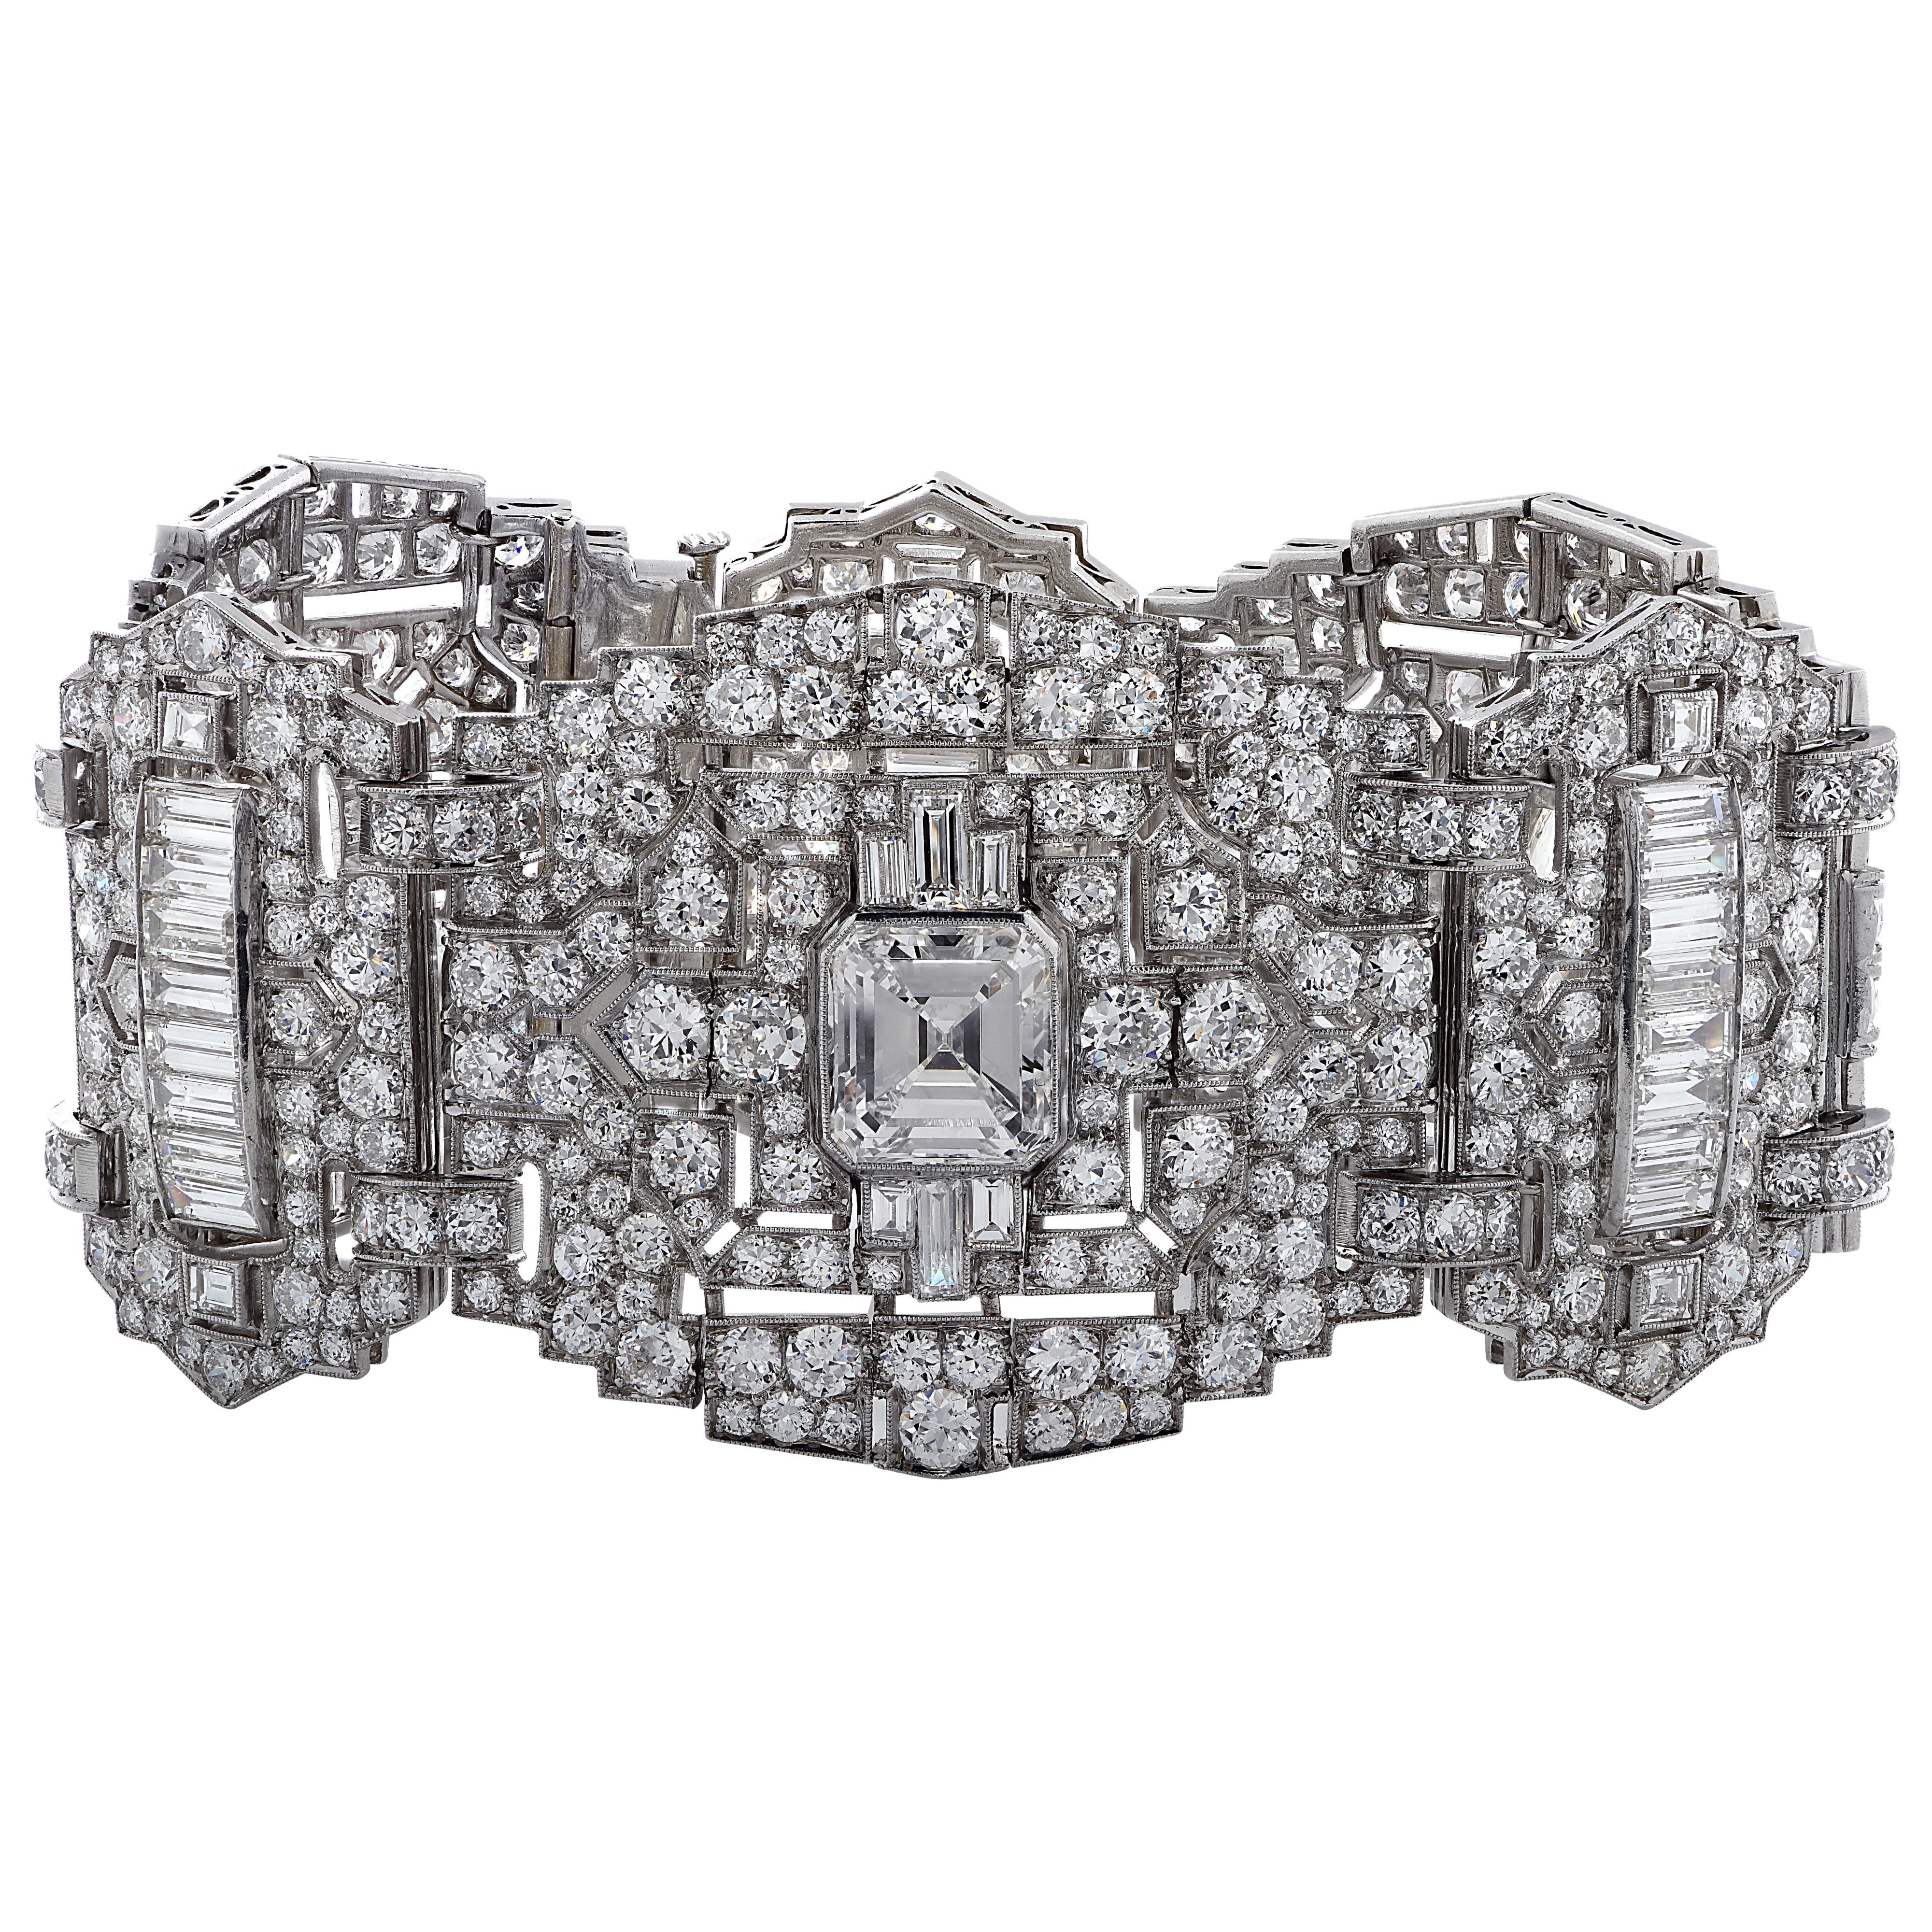 Women's Art Deco 47 Carat Diamond Bracelet